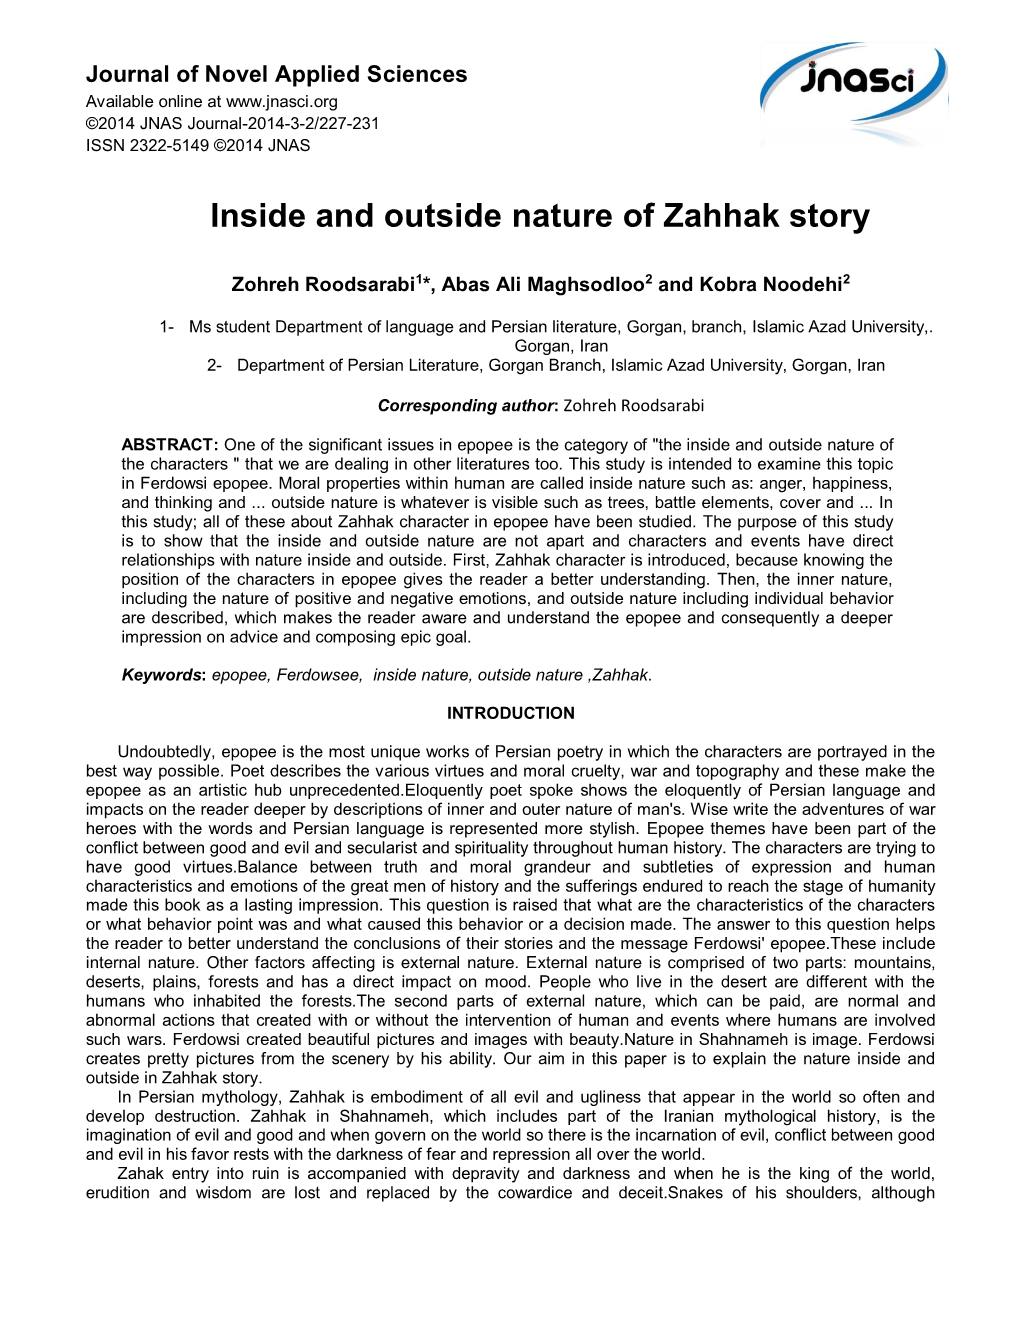 Inside and Outside Nature of Zahhak Story